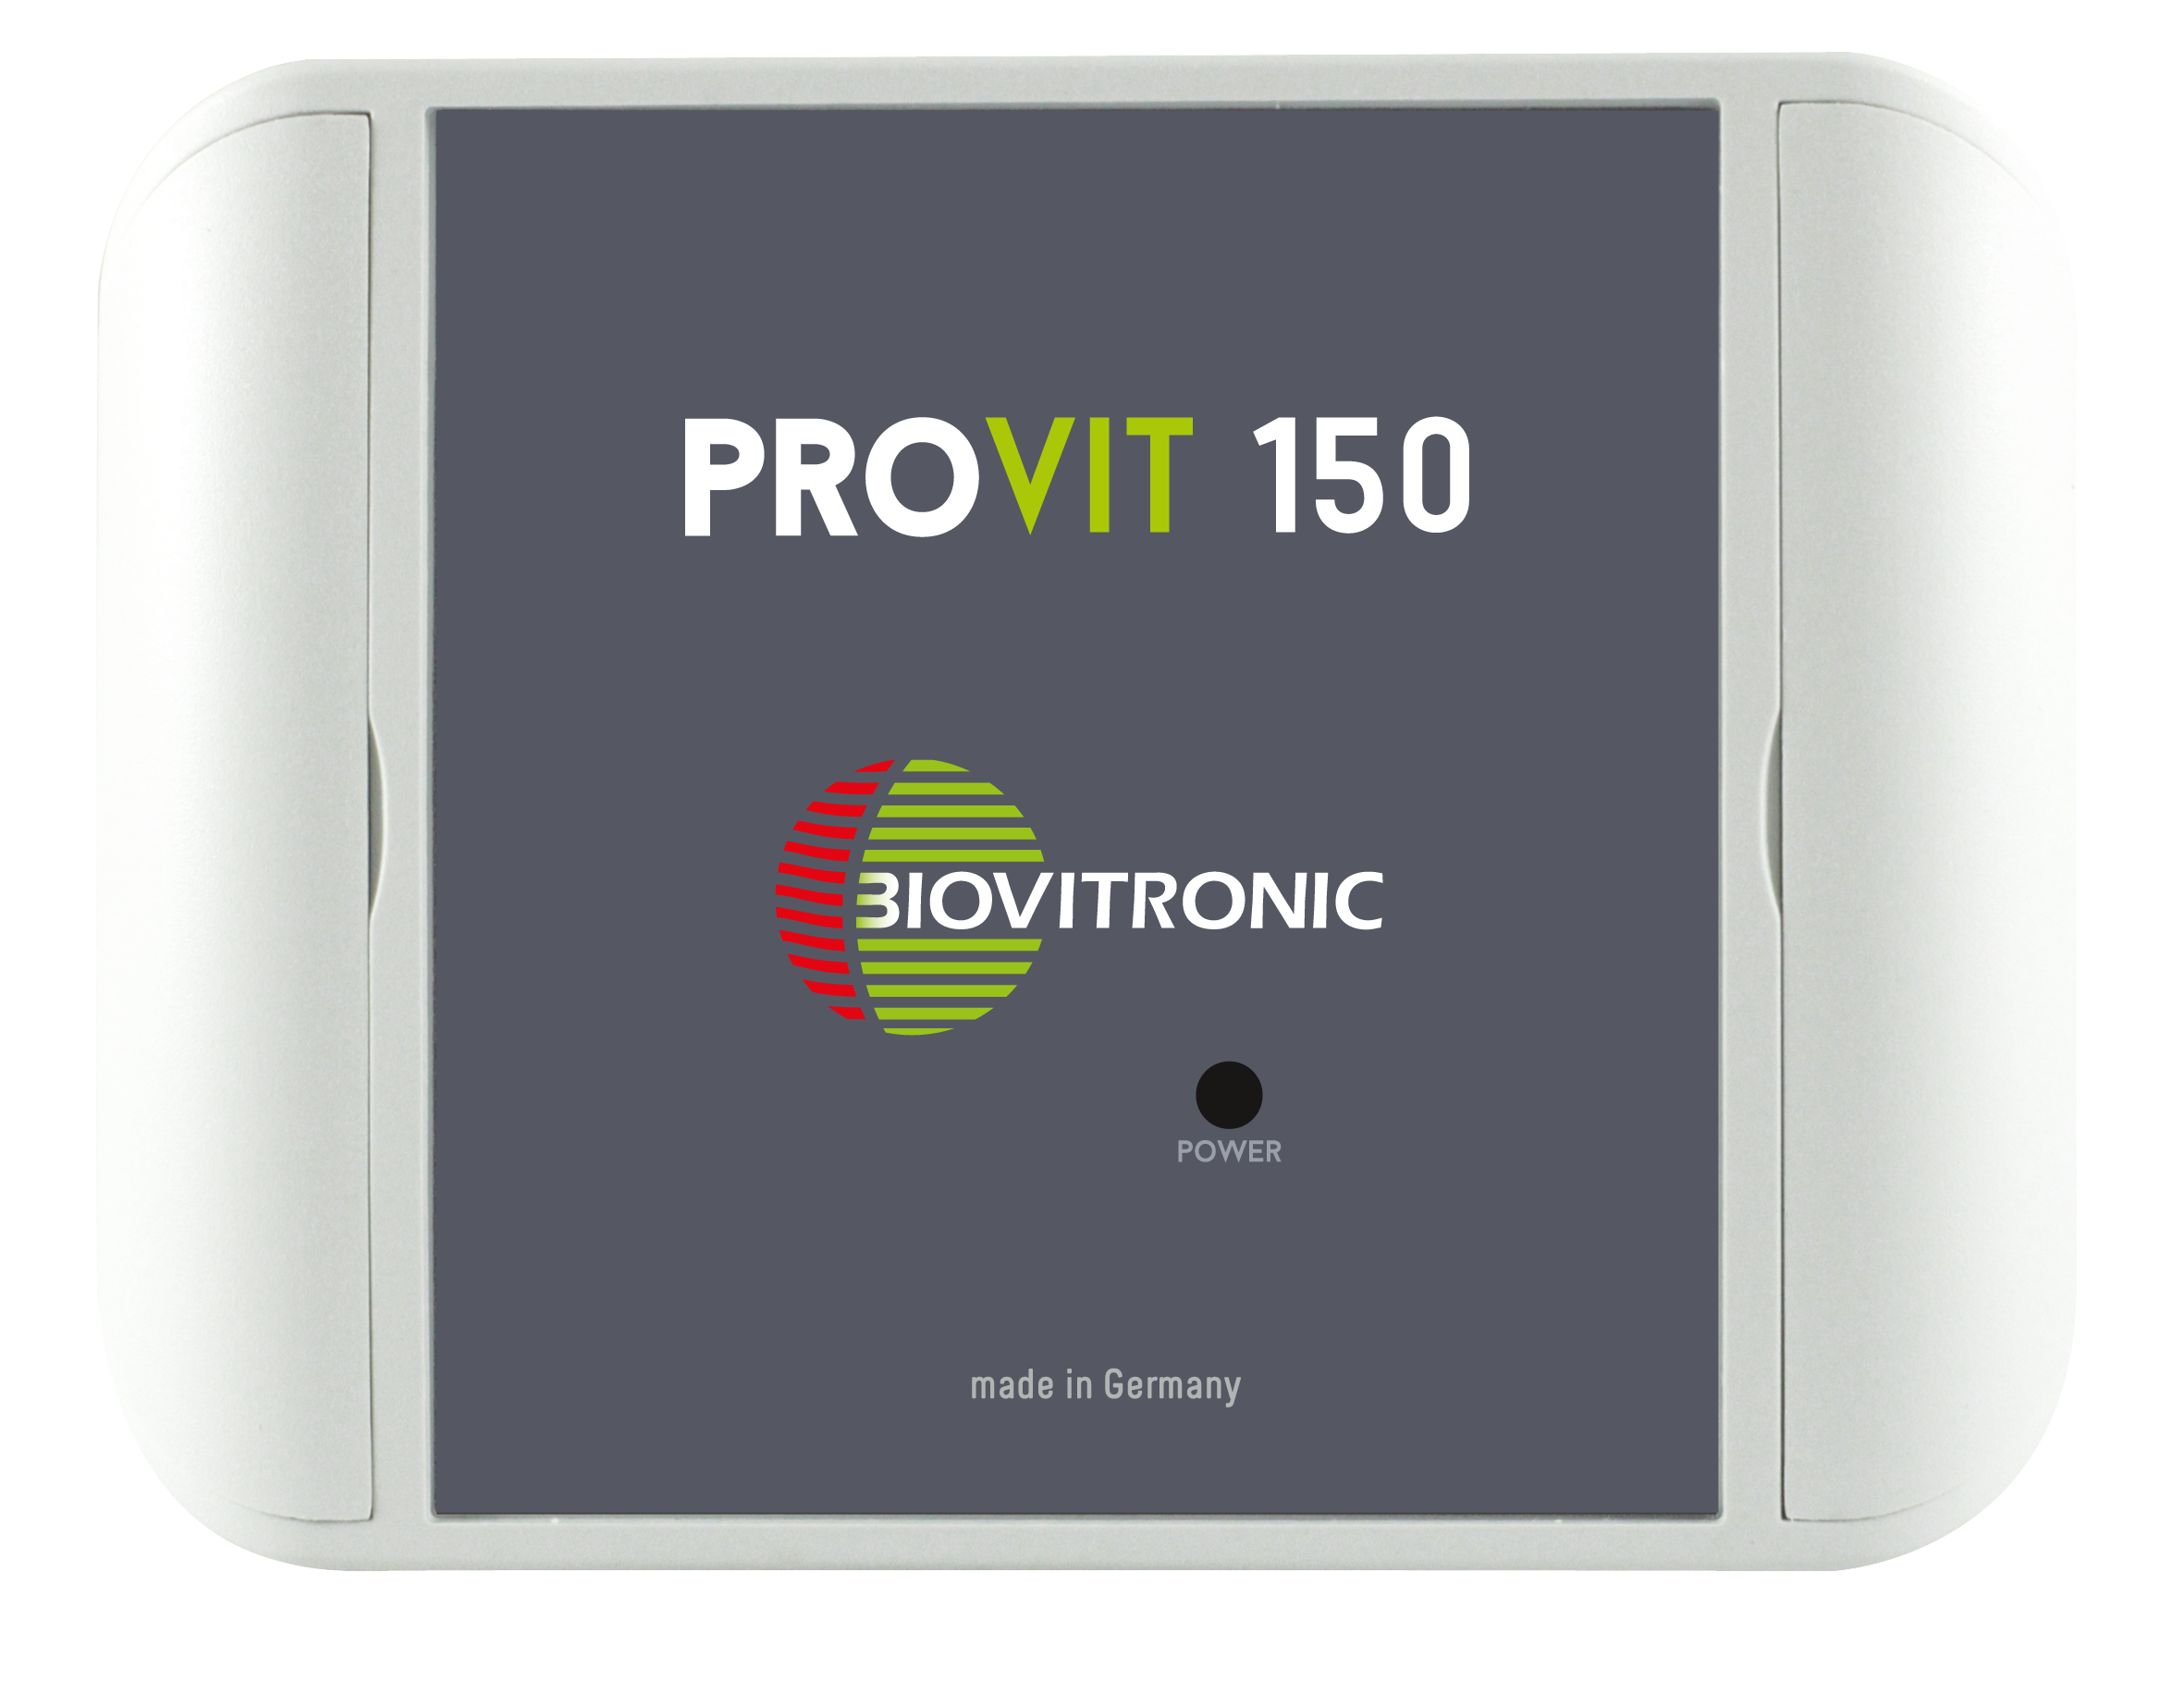 ProVit 150 Biovitronic Vitalizer